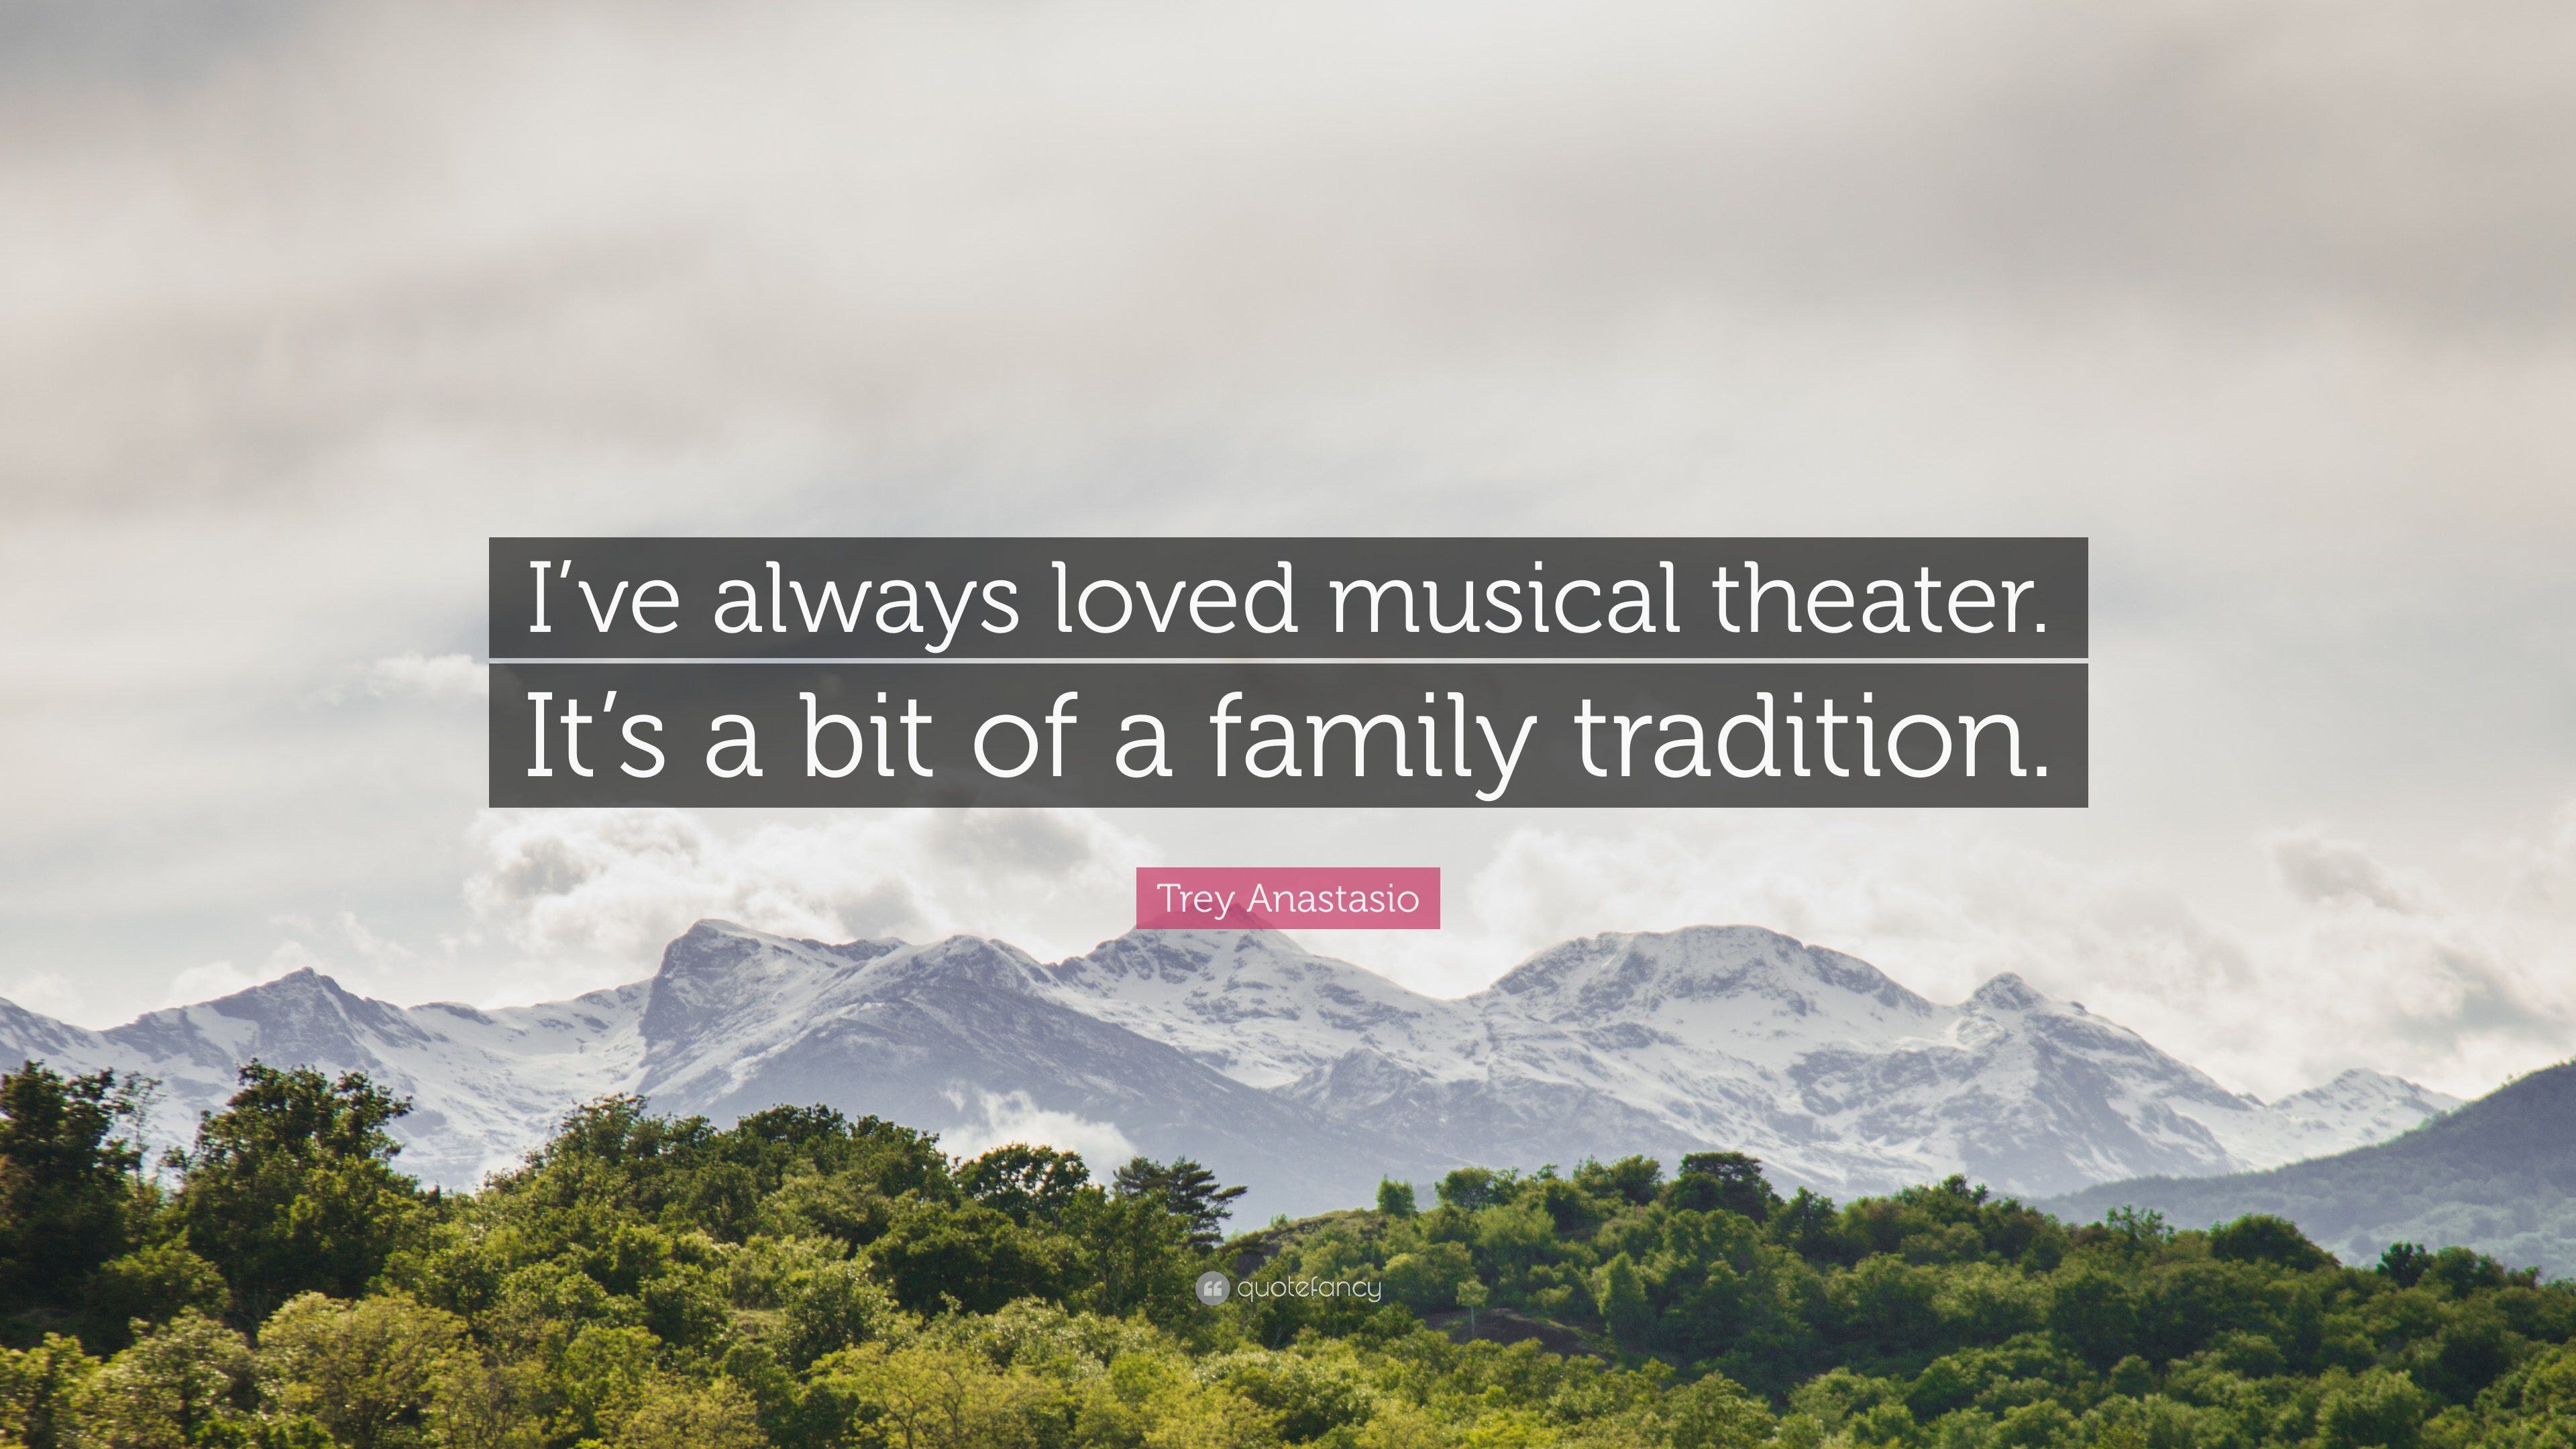 Trey Anastasio Quote: “I've always loved musical theater